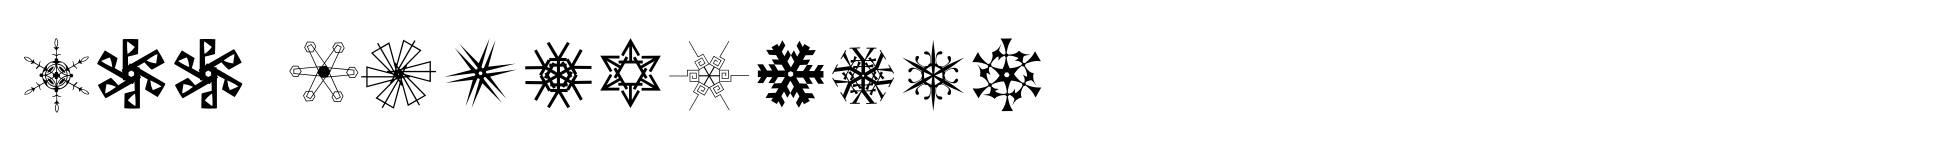 P22 Snowflakes